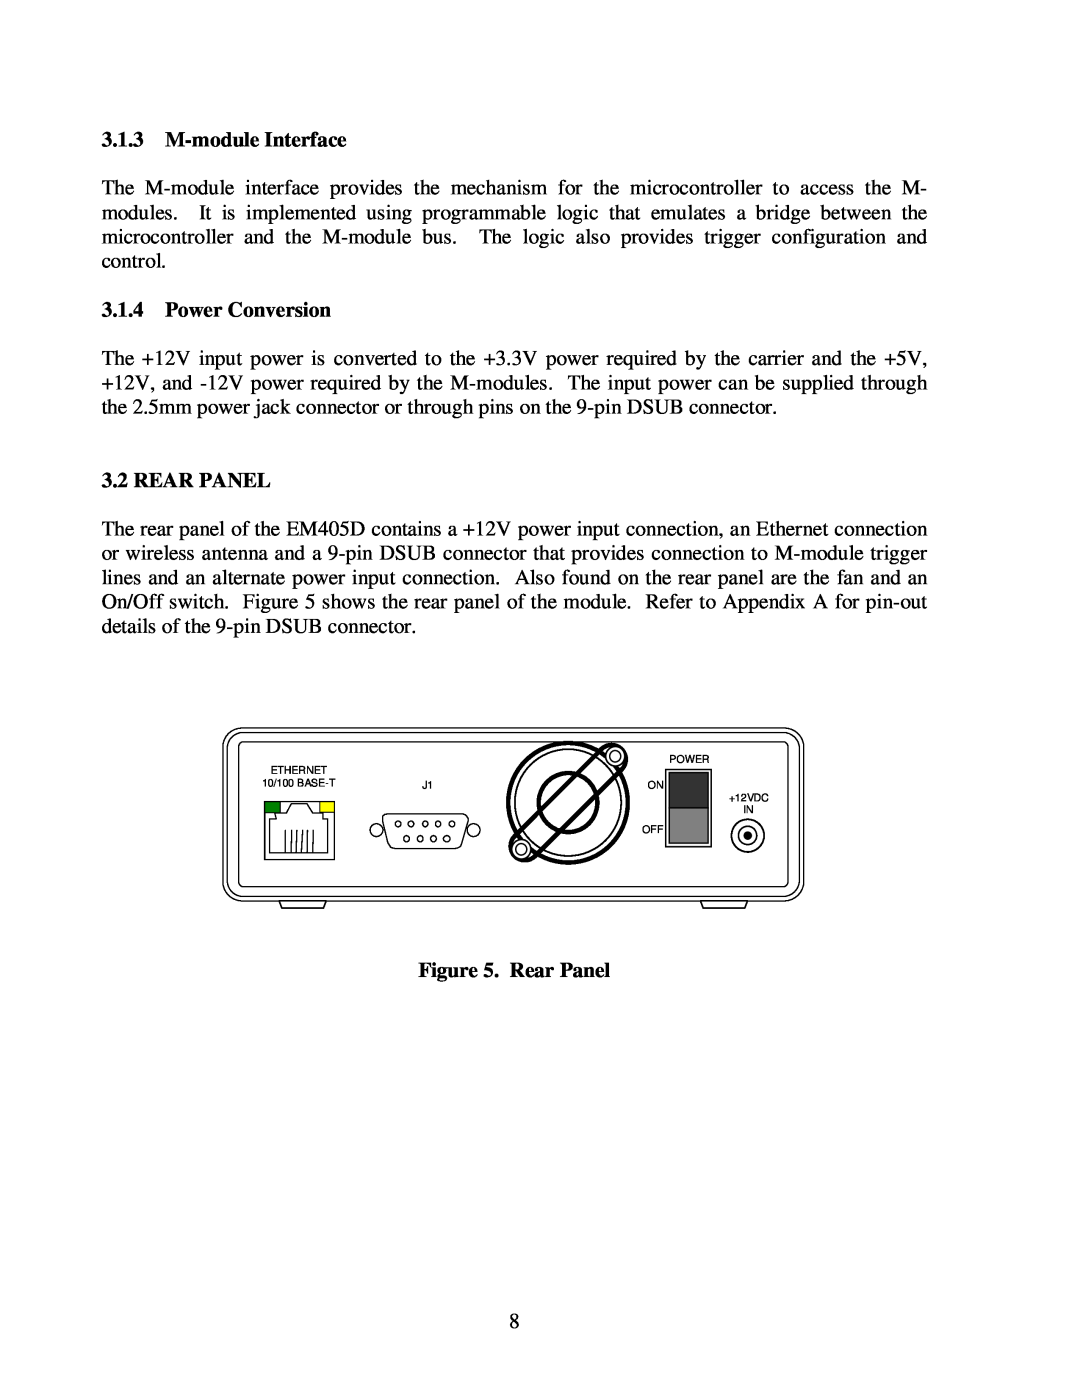 CH Tech EM405D user manual M-module Interface, Power Conversion, Rear Panel 